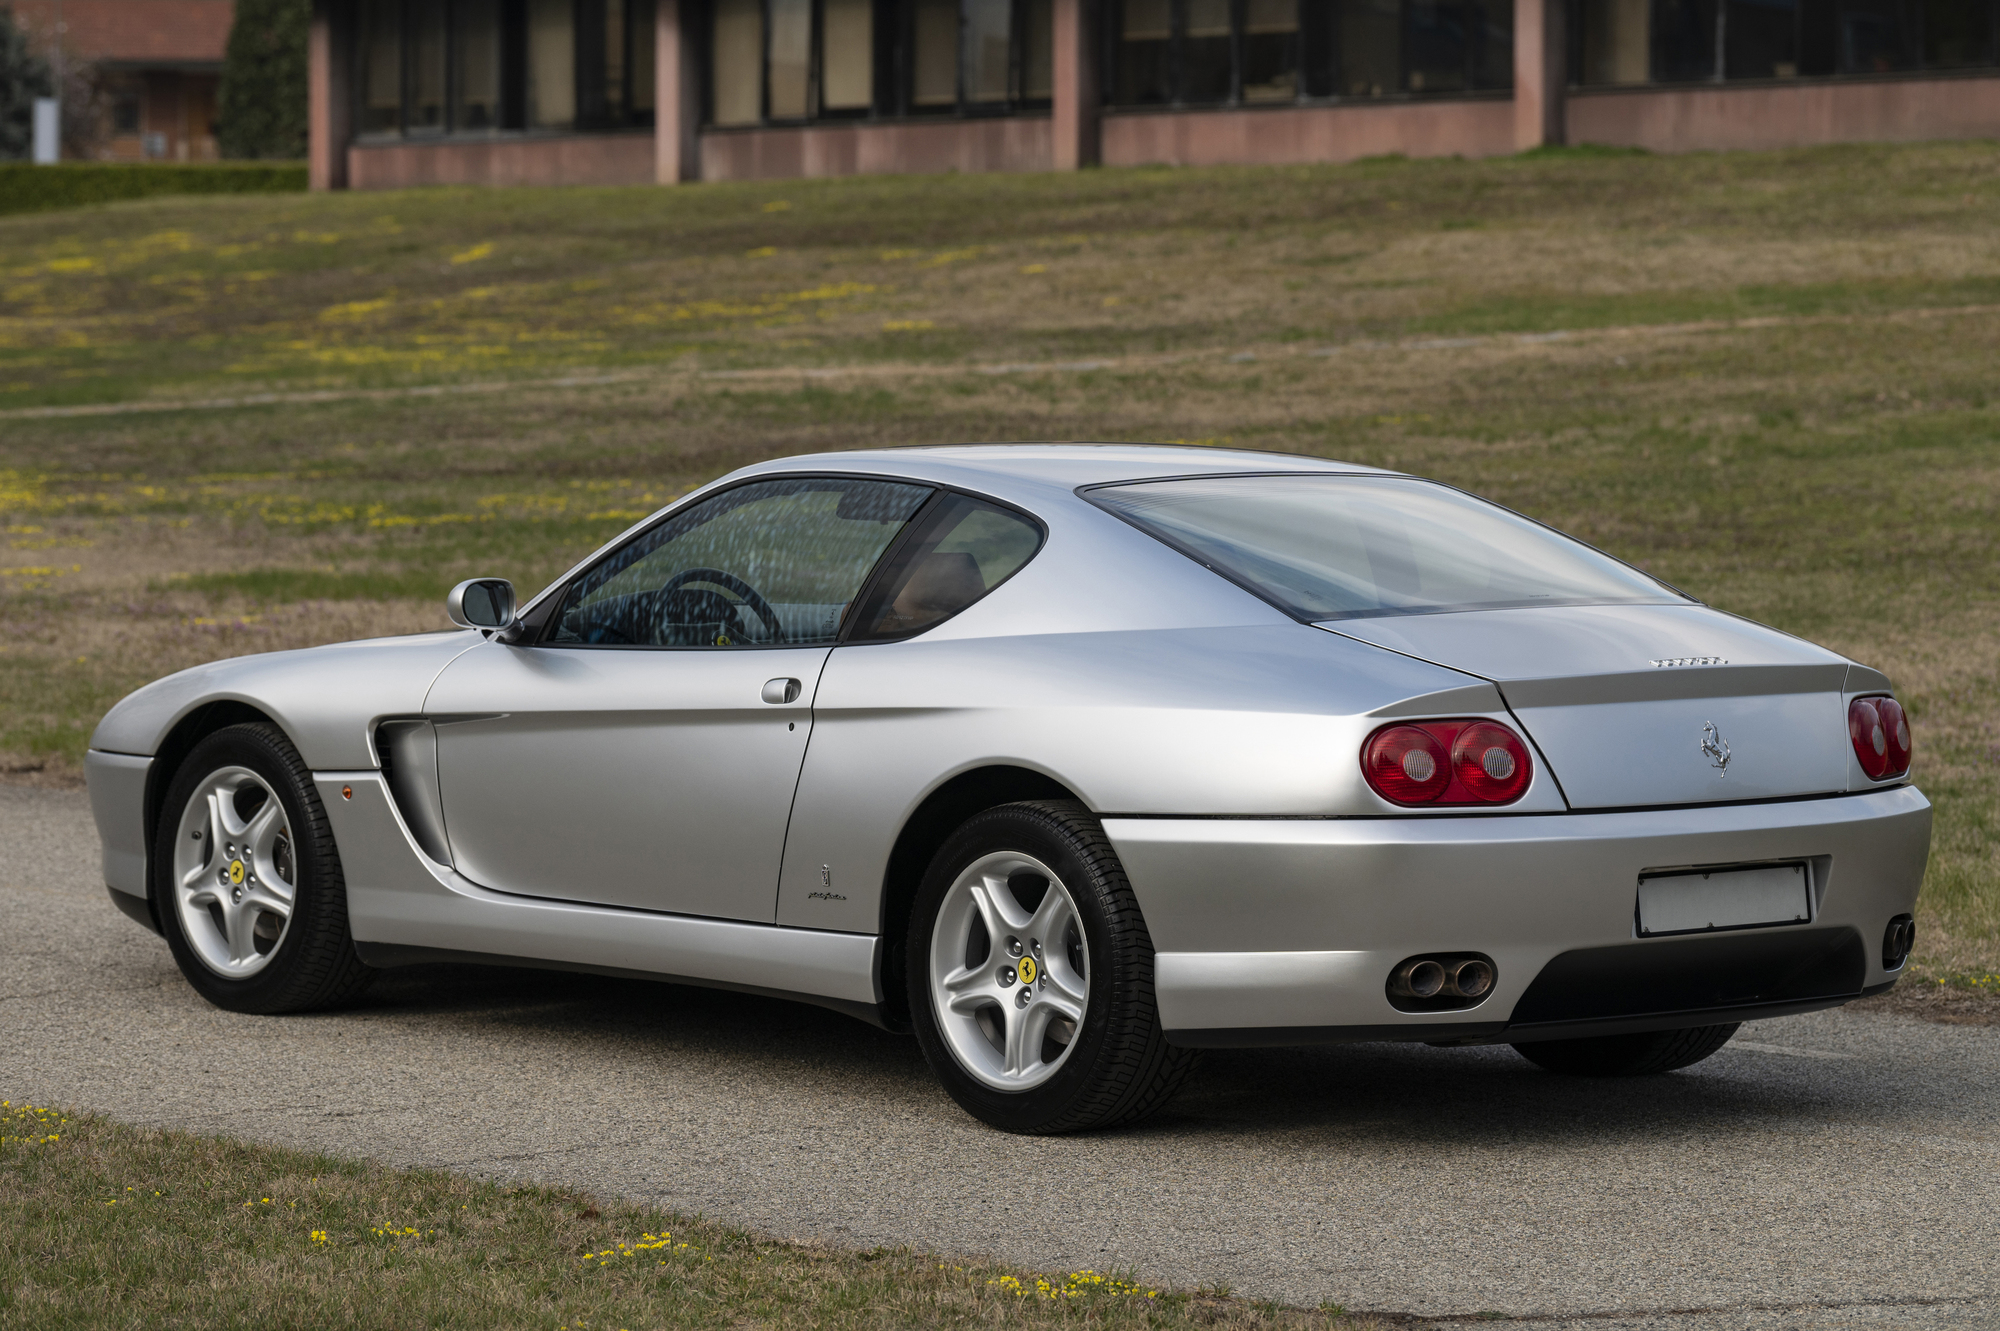 Ferrari 456 GT 优雅修长的车身，视觉呈现赏心悦目， 相当适合作为旅行之用。